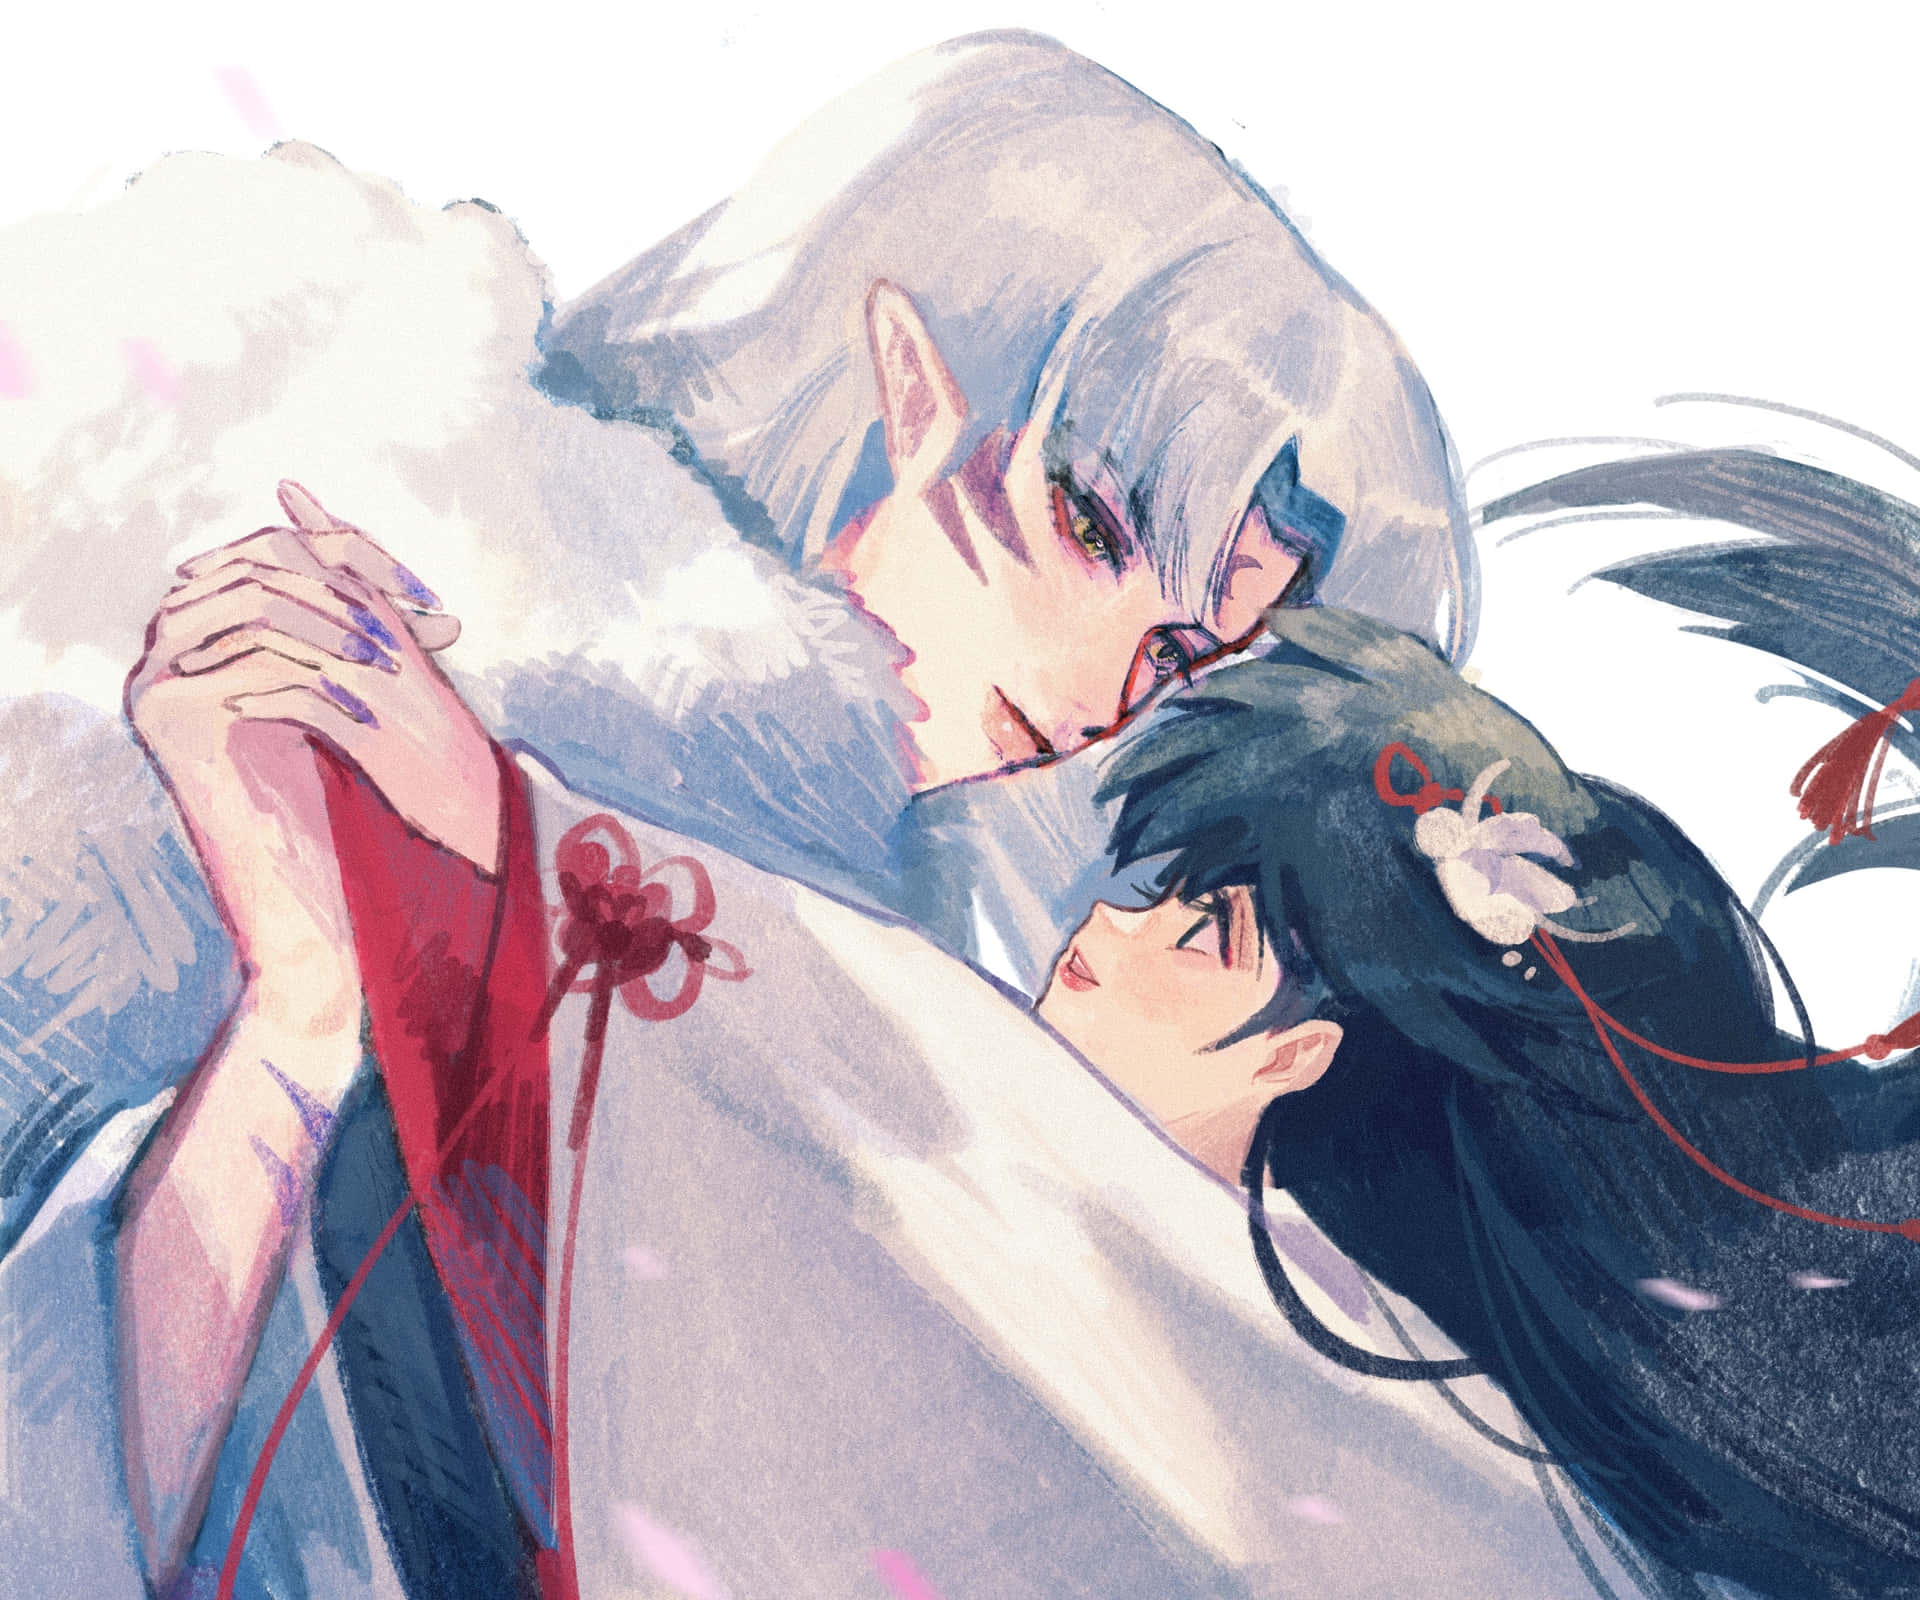 Inuyasha and Rin sharing a heartfelt moment Wallpaper